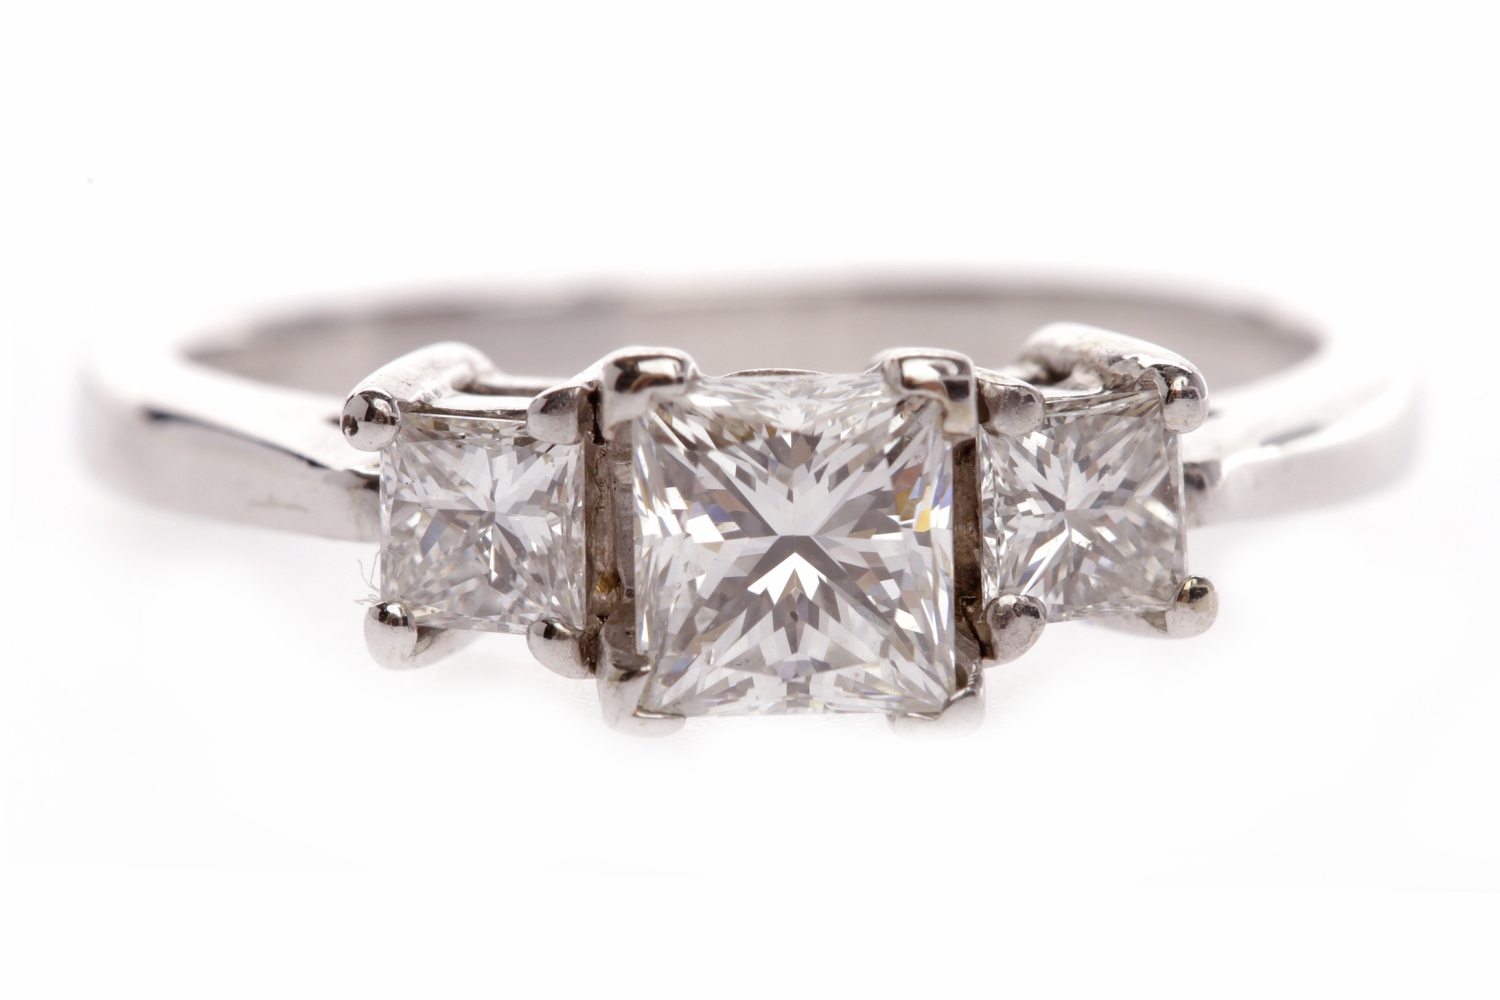 DIAMOND THREE STONE RING the central princess cut diamond of approximately 0.